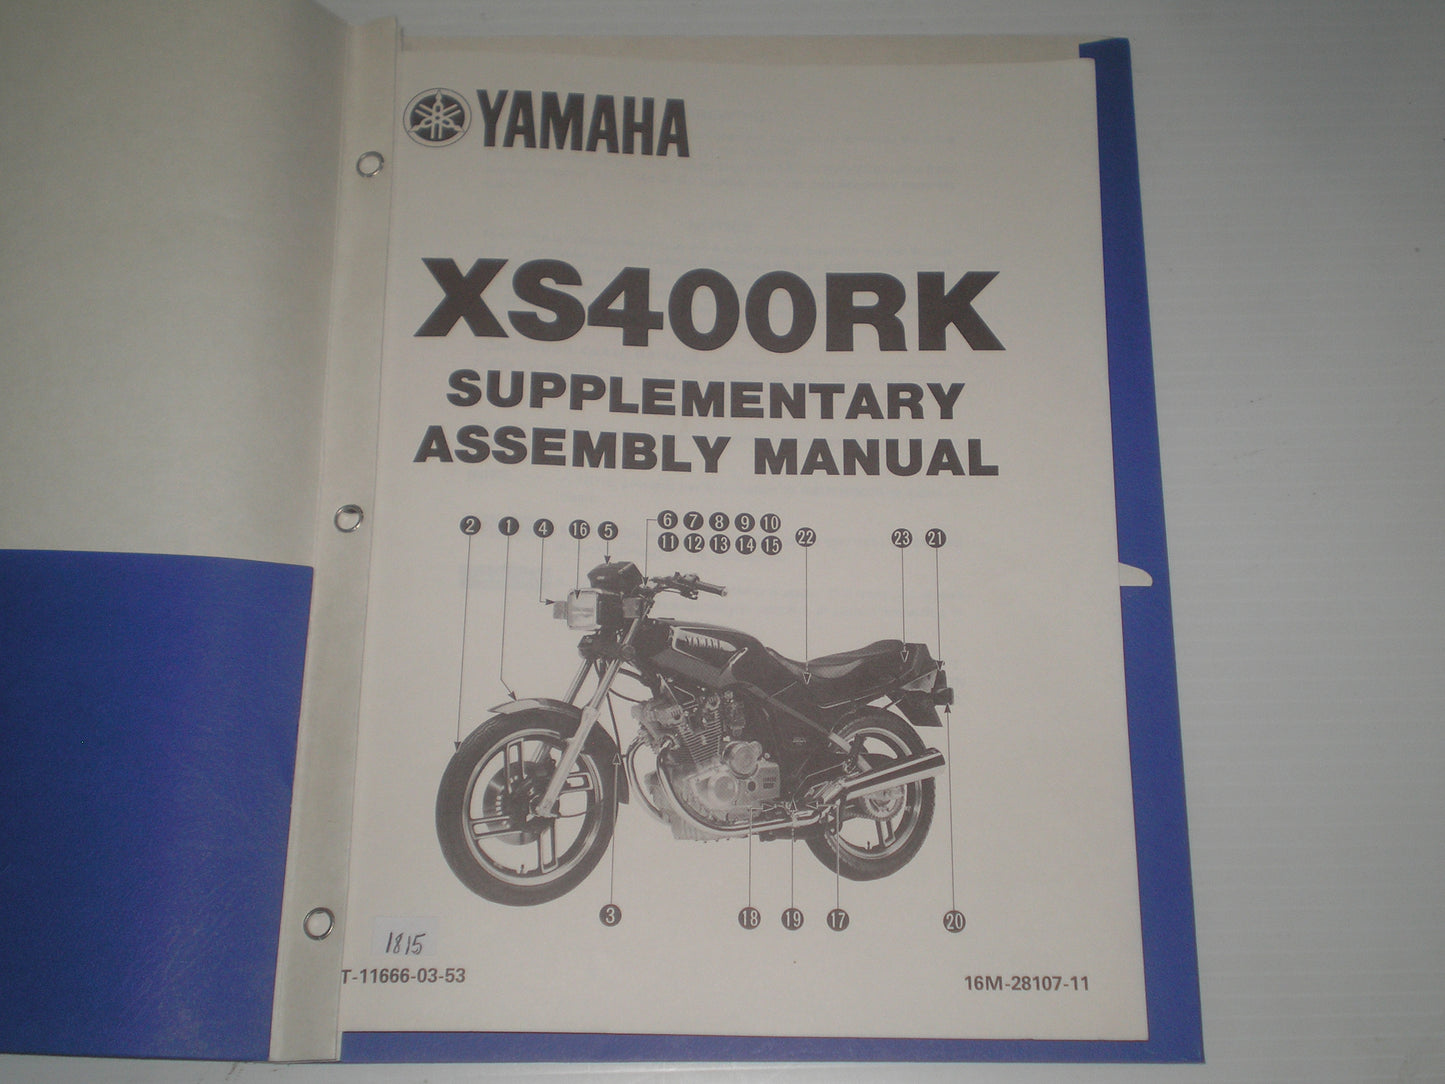 YAMAHA XS400R K Seca  1983  Assembly Manual Supplement  16M-28107-11  LIT-11666-03-53  #1815